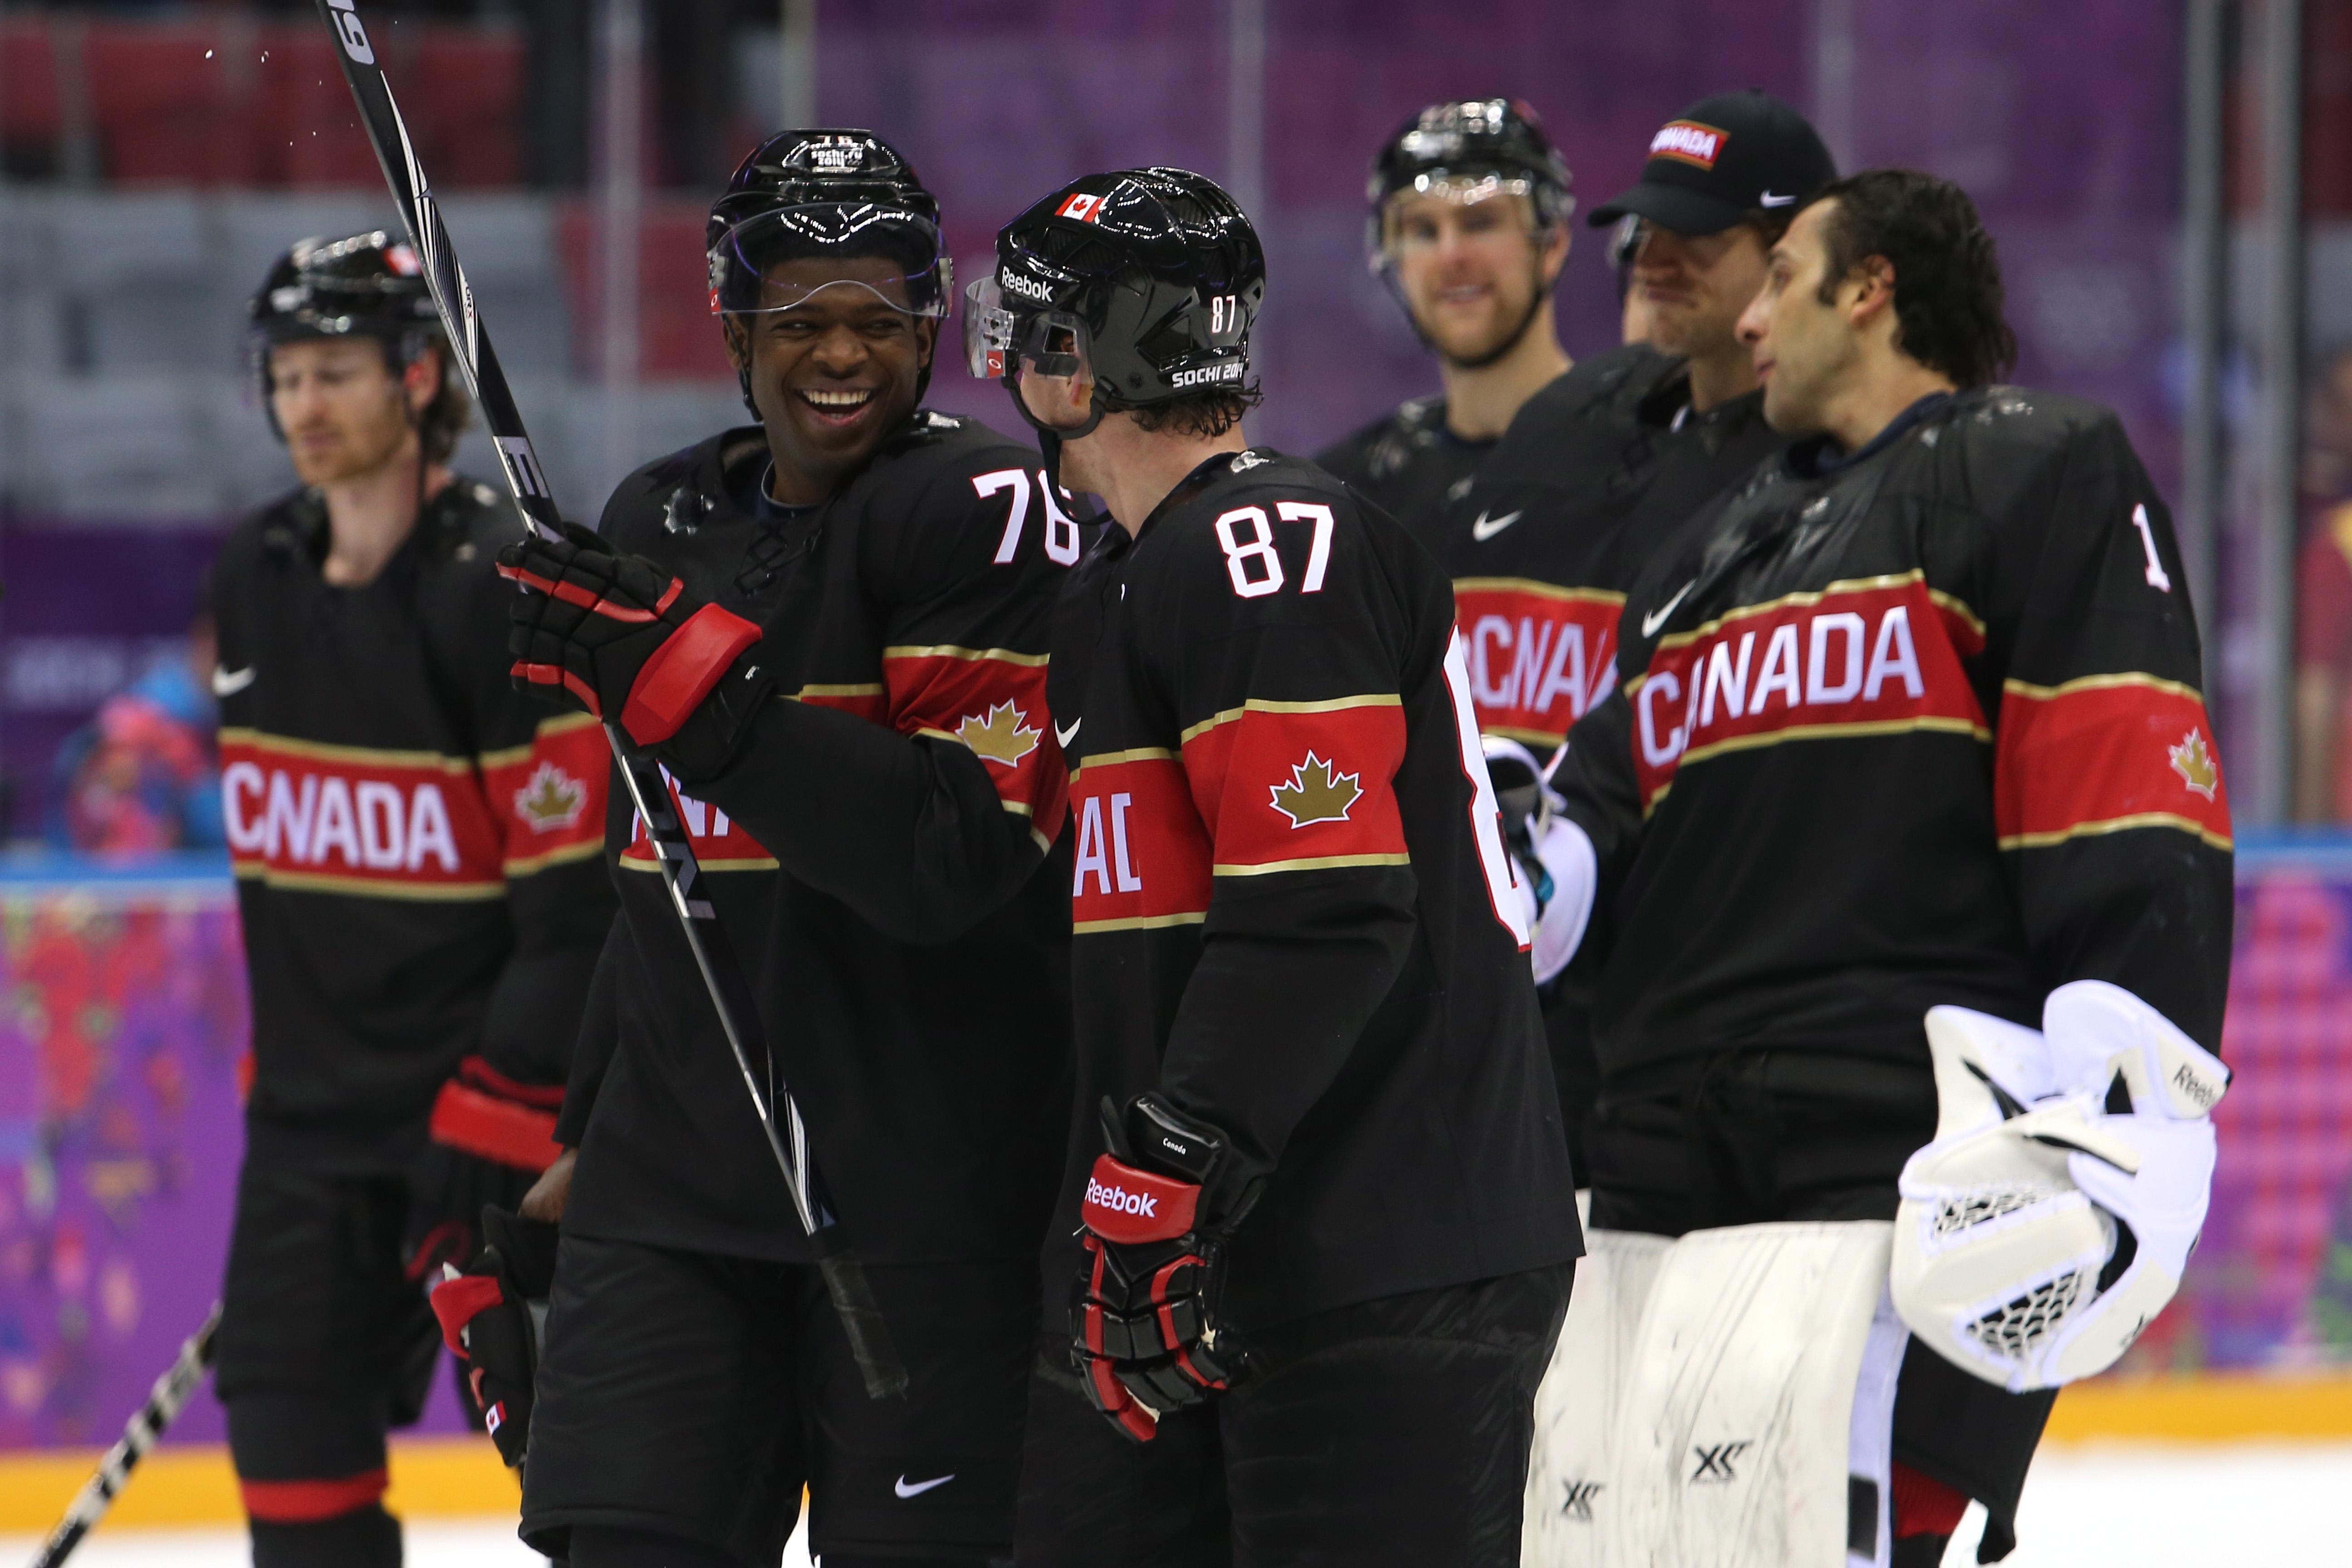 Crosby and Subban joking after victory at 2014 Olympics